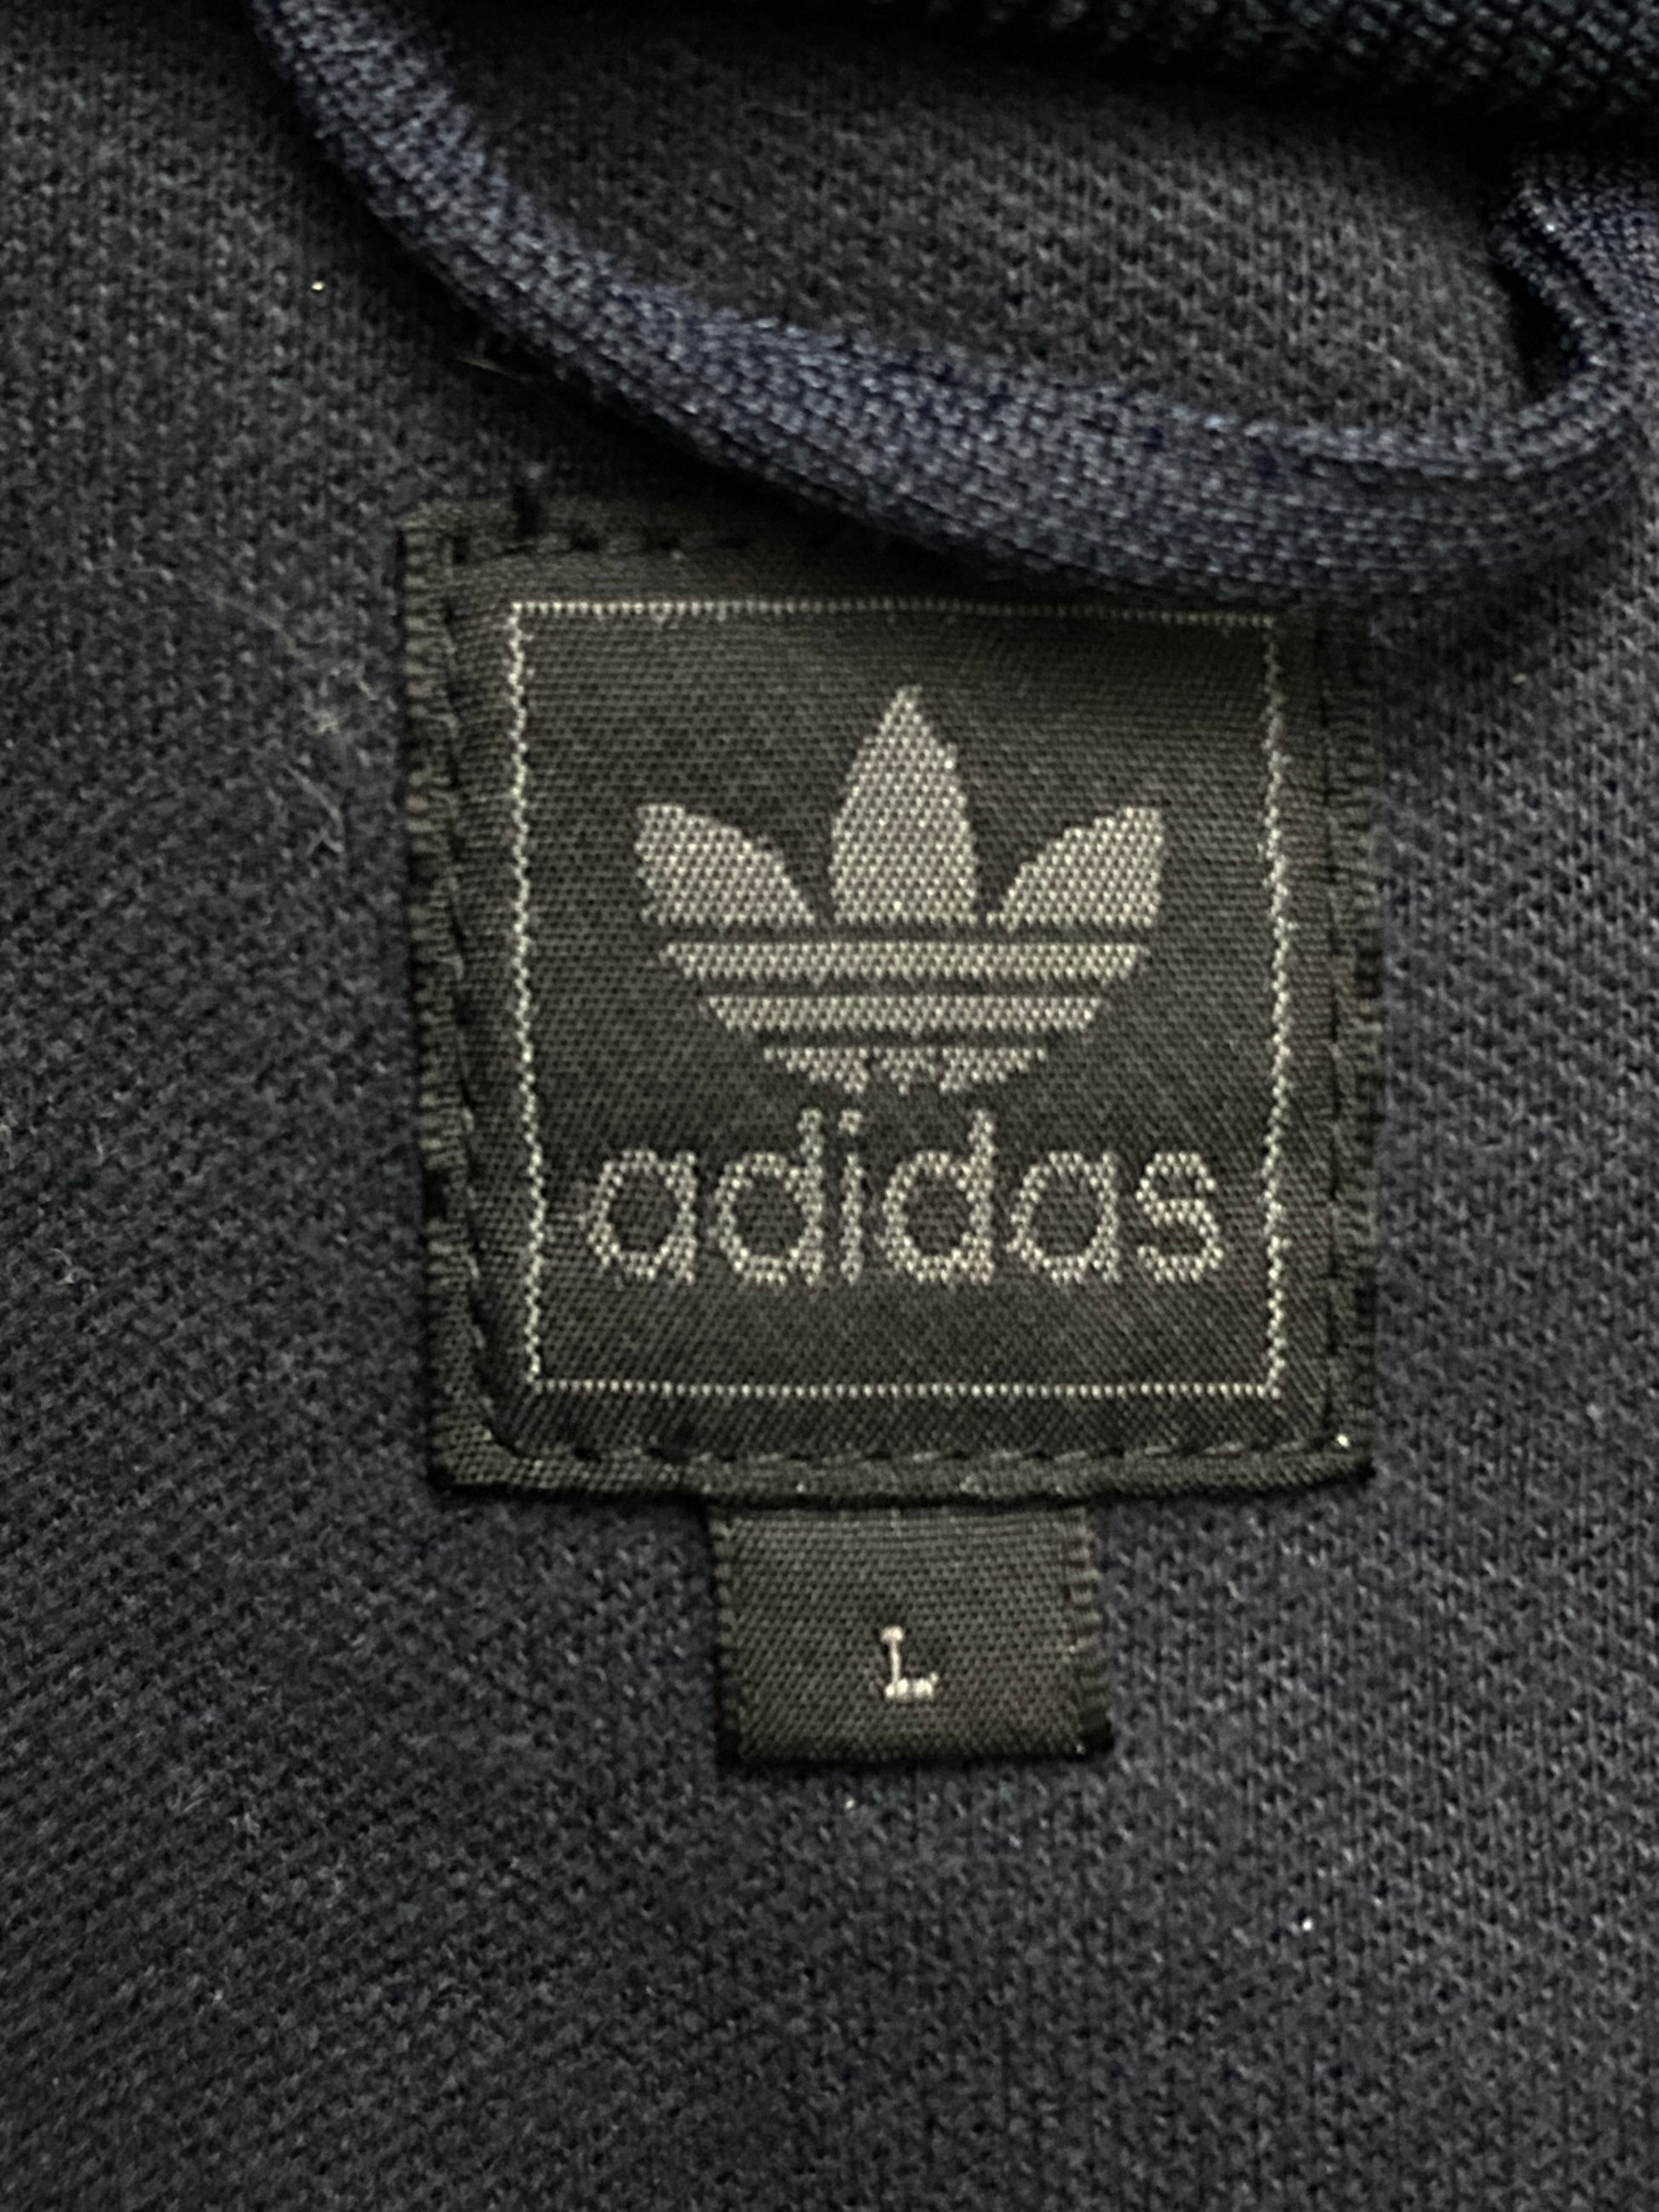 Adidas Vintage Men's Track Jacket - Medium Navy Blue Cotton Blend